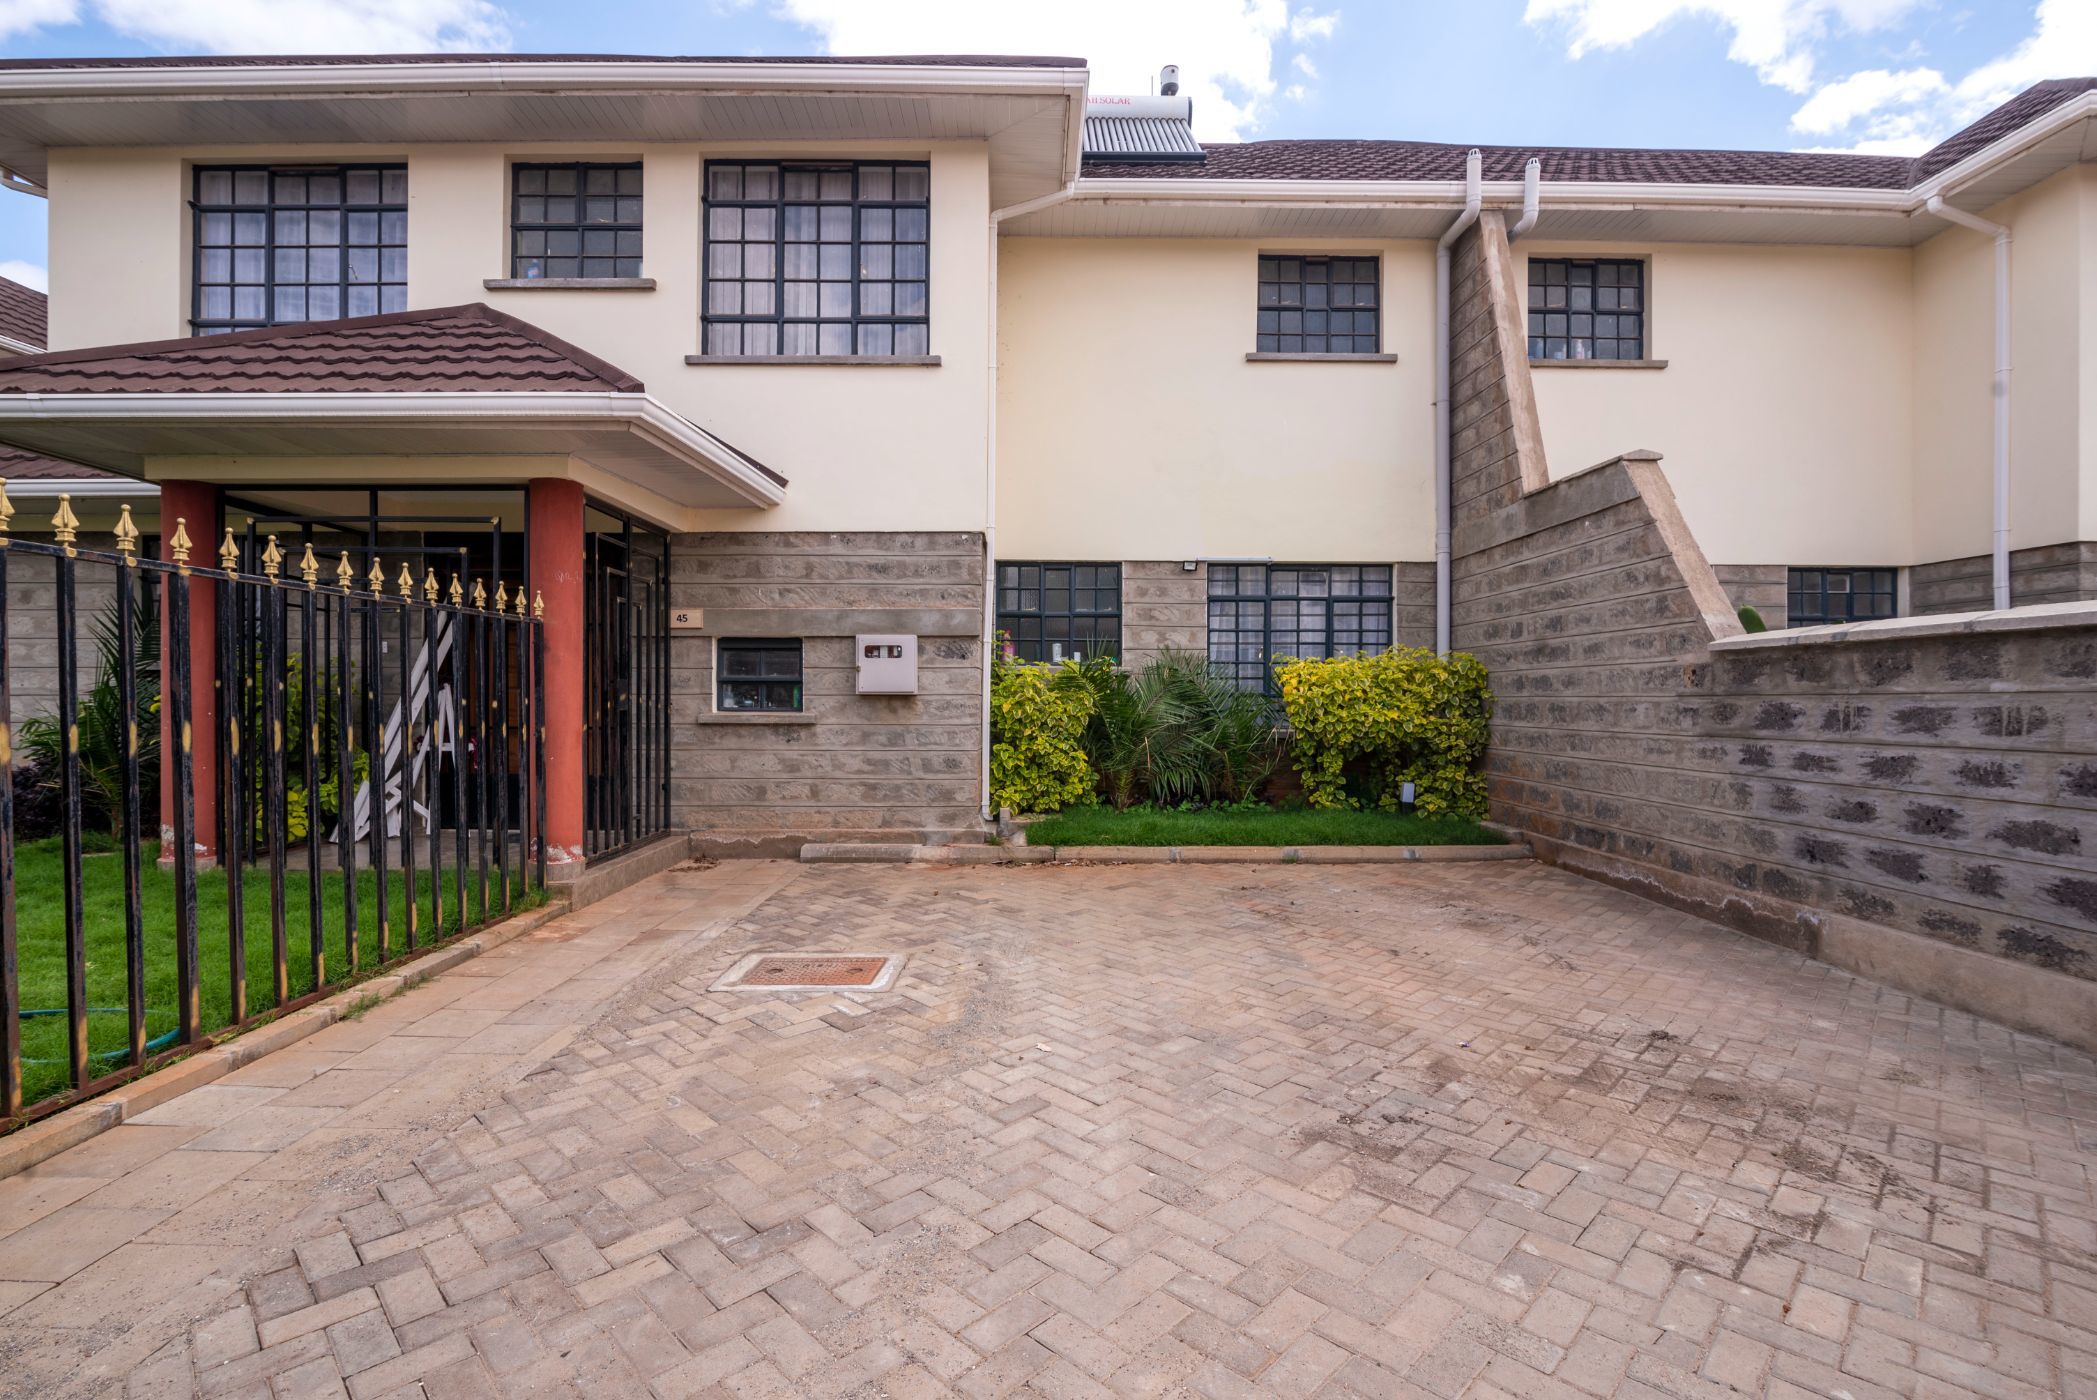 4 bedroom house for sale in Kitengela (Kenya)